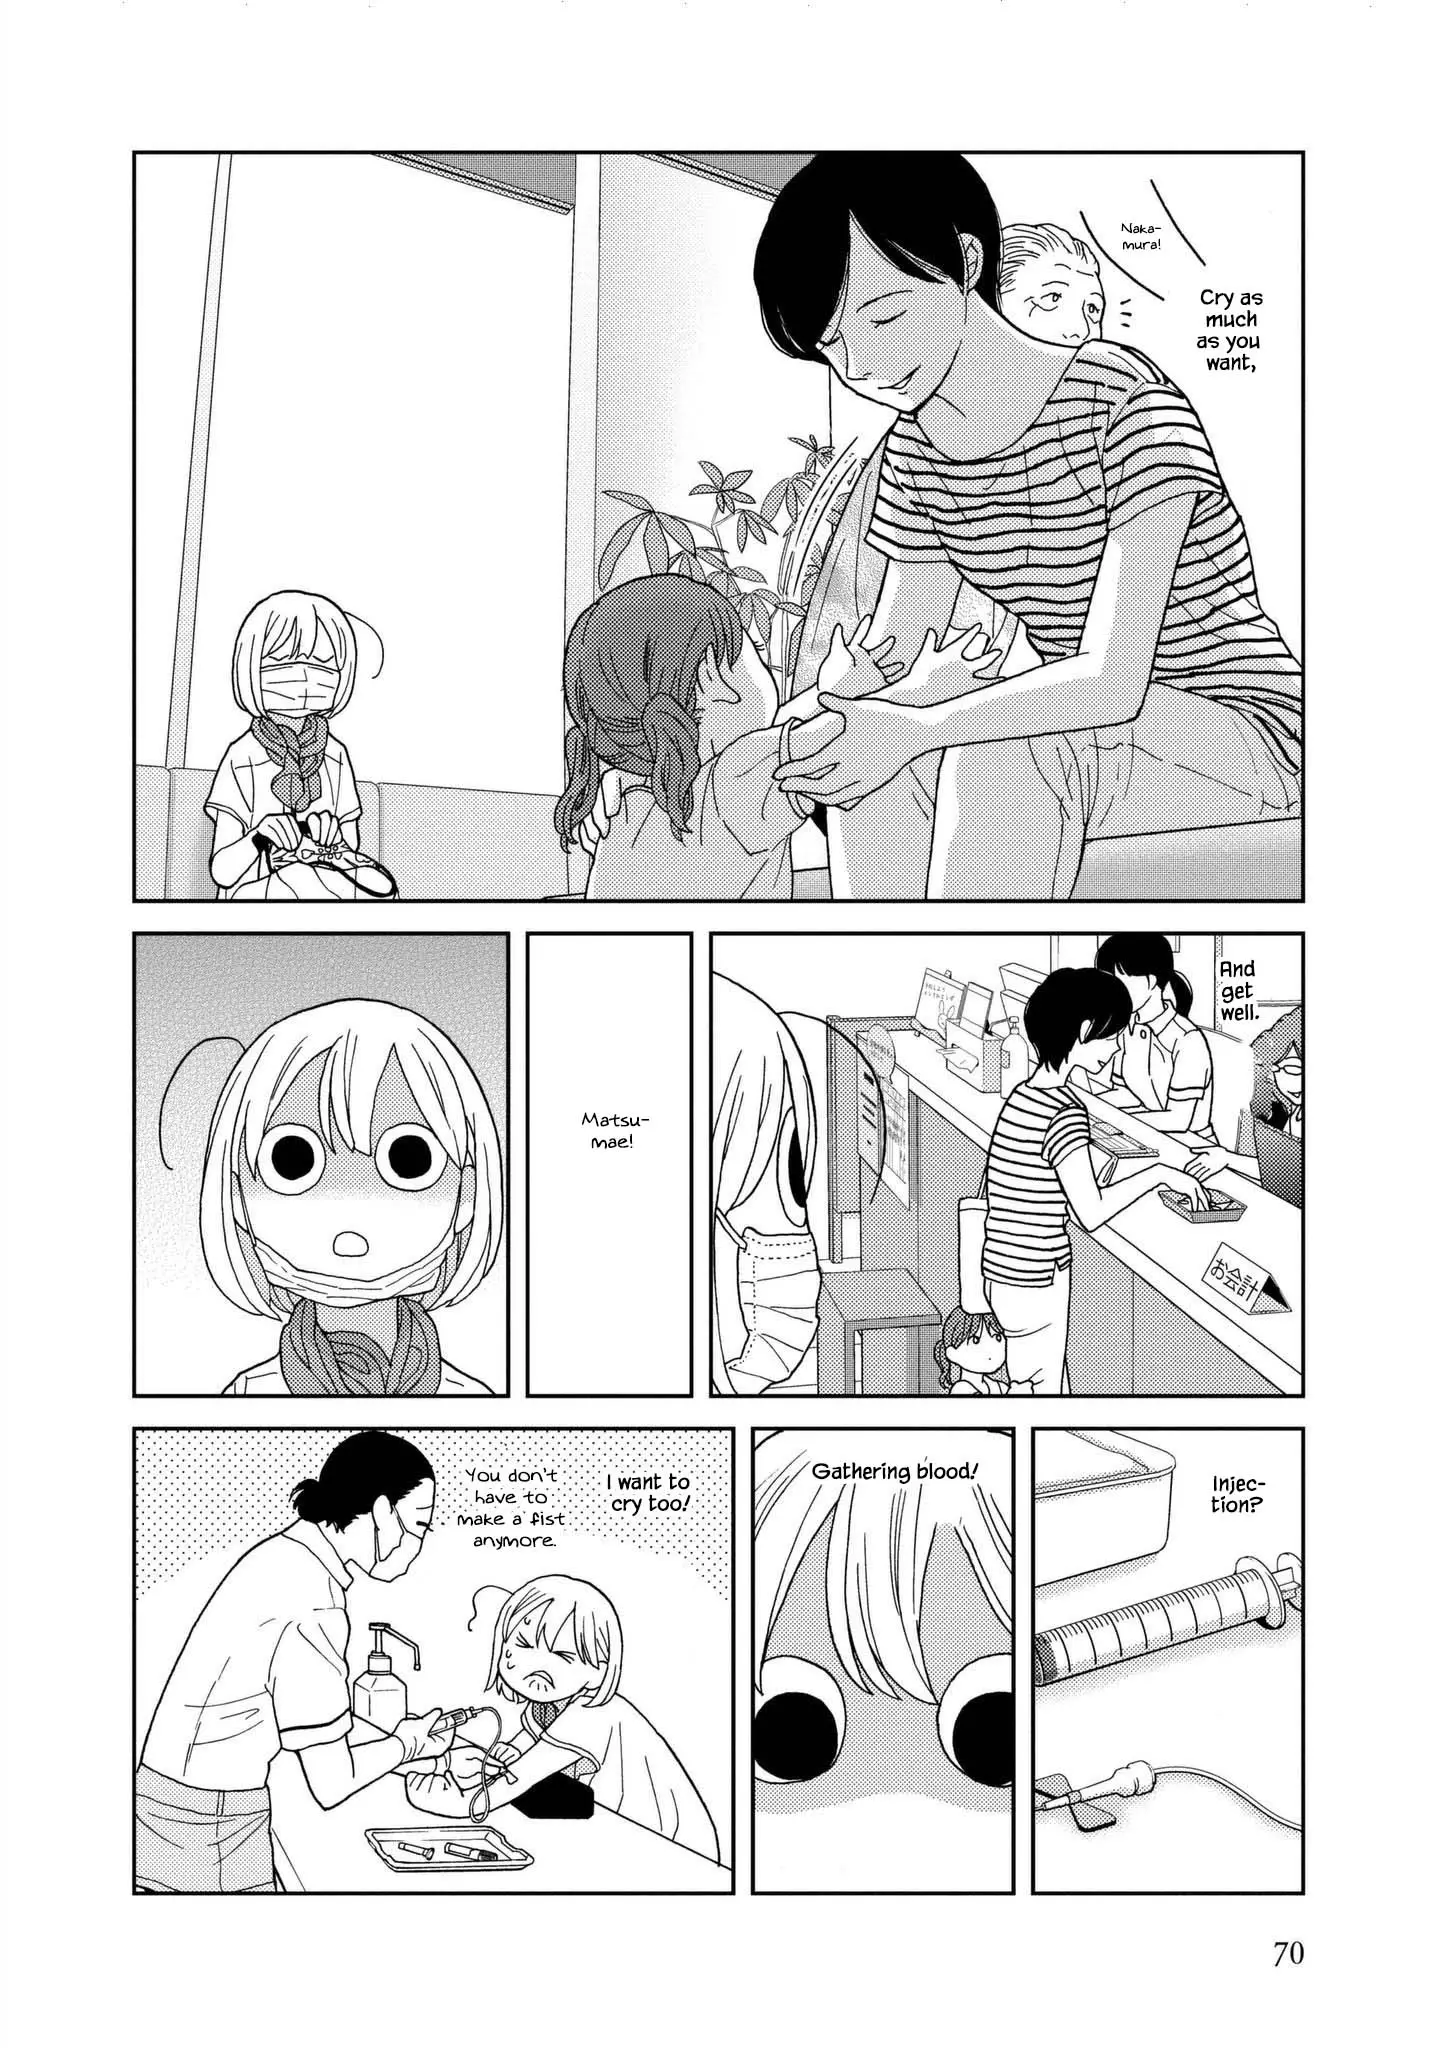 Takako-San - 46 page 8-7123fd0a